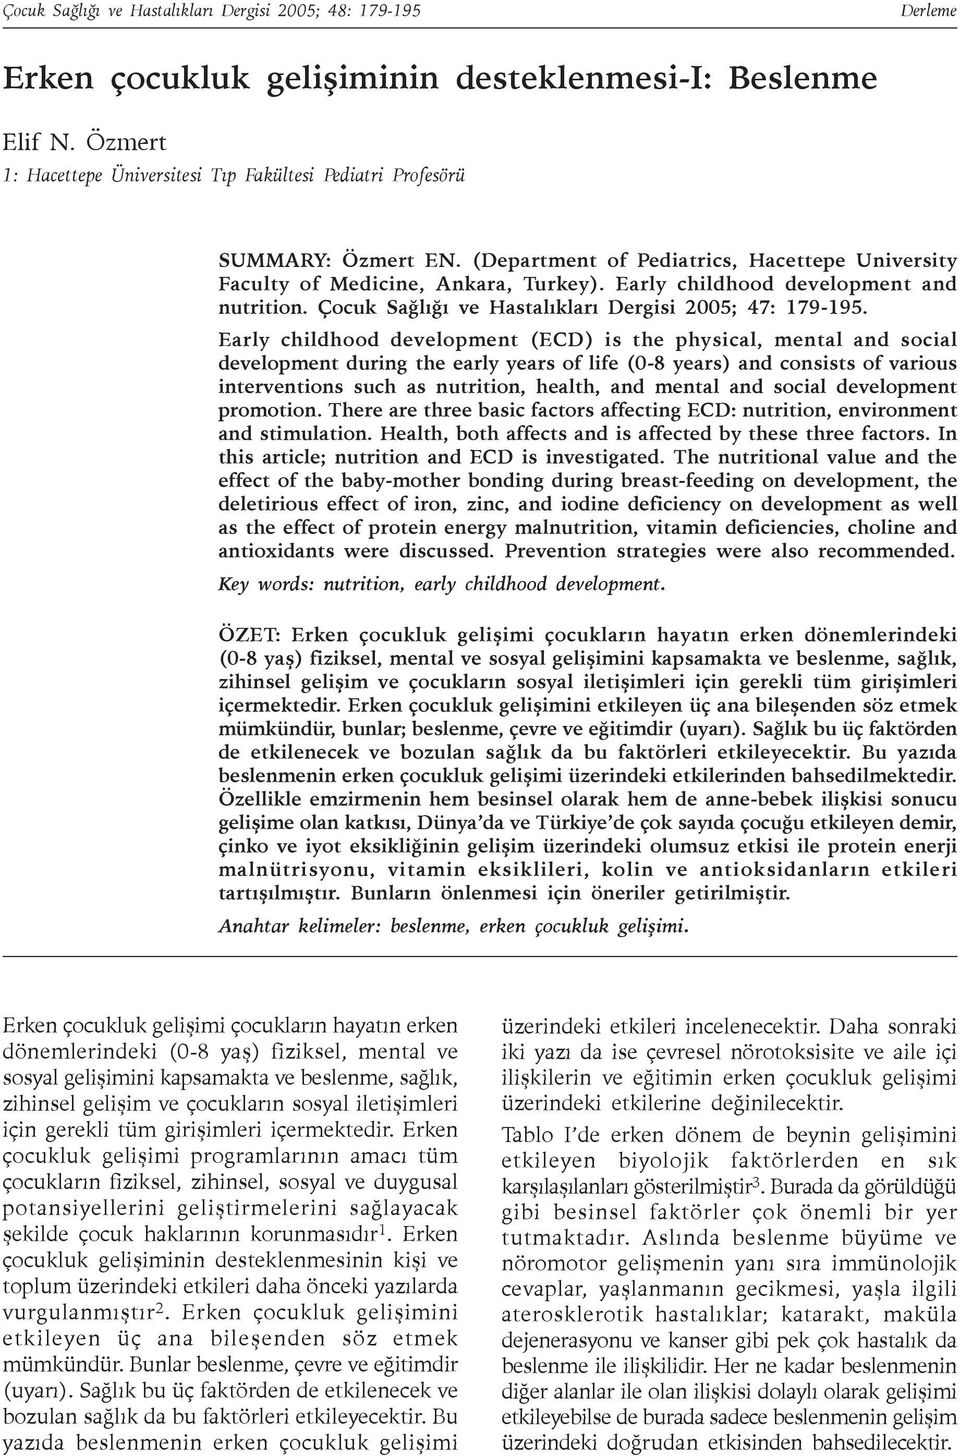 Early childhood development and nutrition. Çocuk Saðlýðý ve Hastalýklarý Dergisi 2005; 47: 179-195.